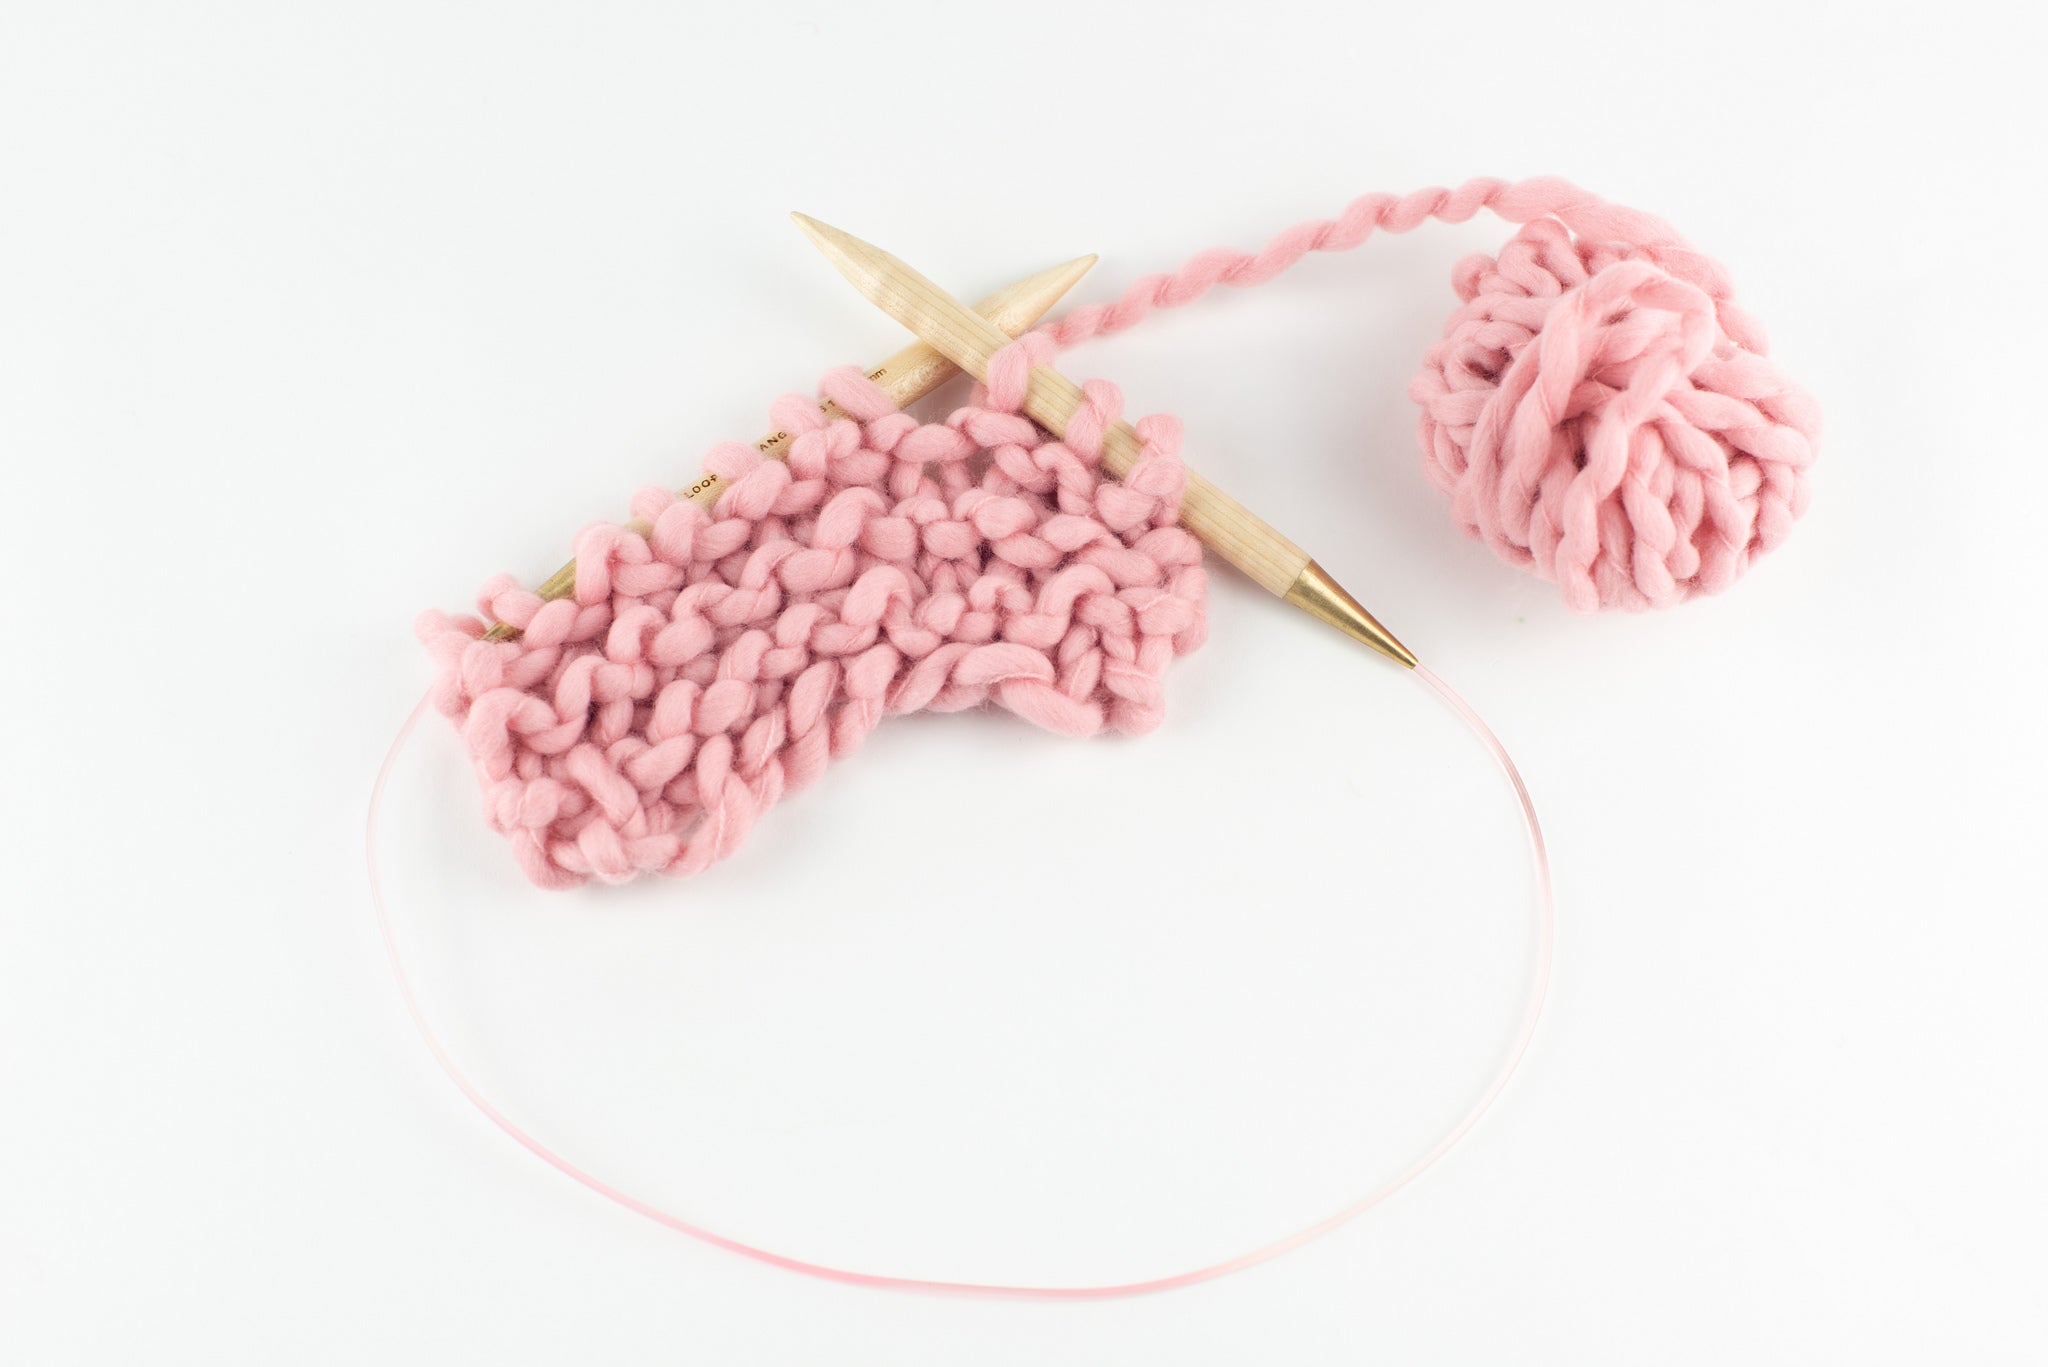 15mm (US 19) KNITPRO Ginger wood interchangeable circular knitting needles   Knit Design Studio - Super chunky yarns. Chunky knitted blankets. Chunky  knitwear. Knitting Kits.